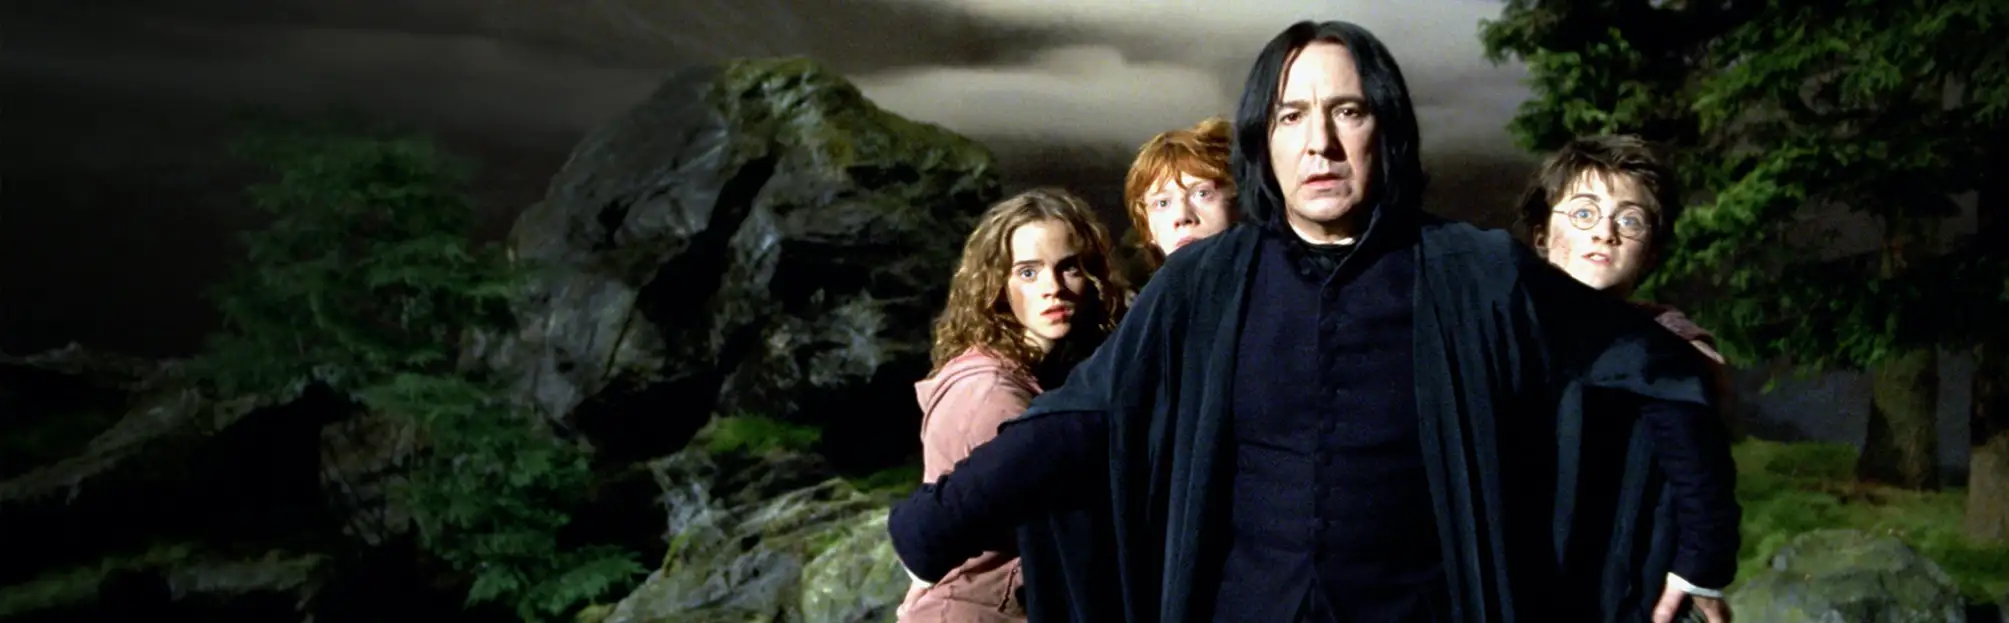 Harry Potter and the Prisoner of Azkaban (20th Anniversary)